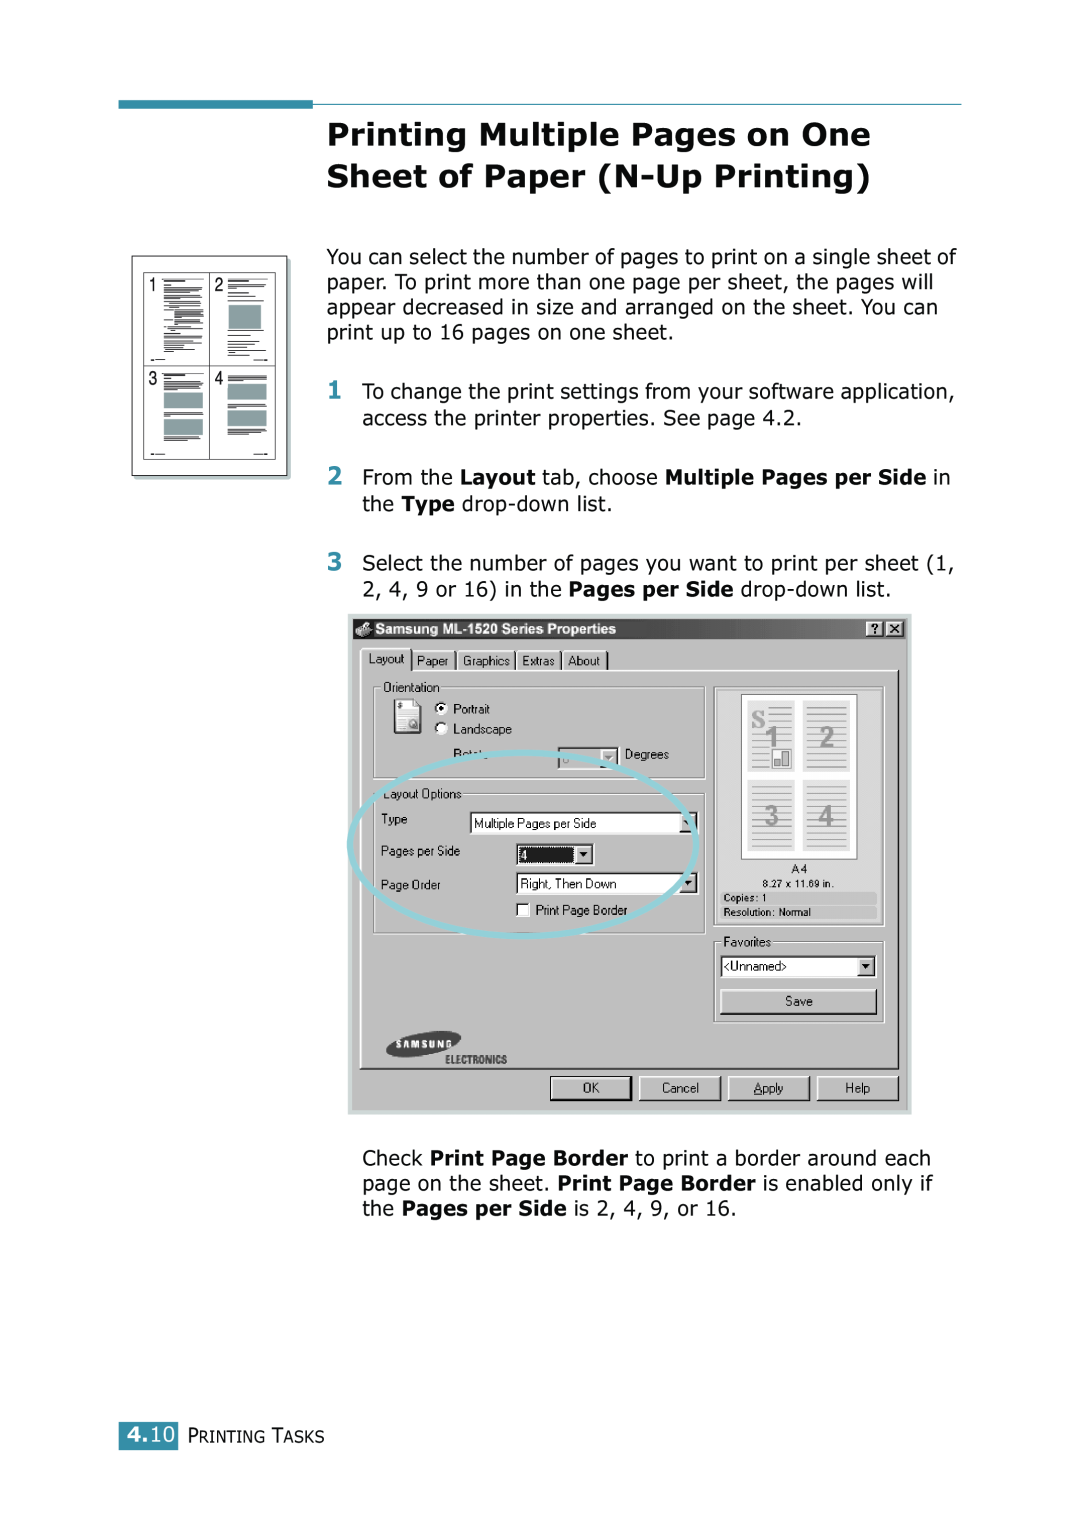 Samsung ML-1520 manual Printing Multiple Pages on One Sheet of Paper N-Up Printing, Printing Tasks 